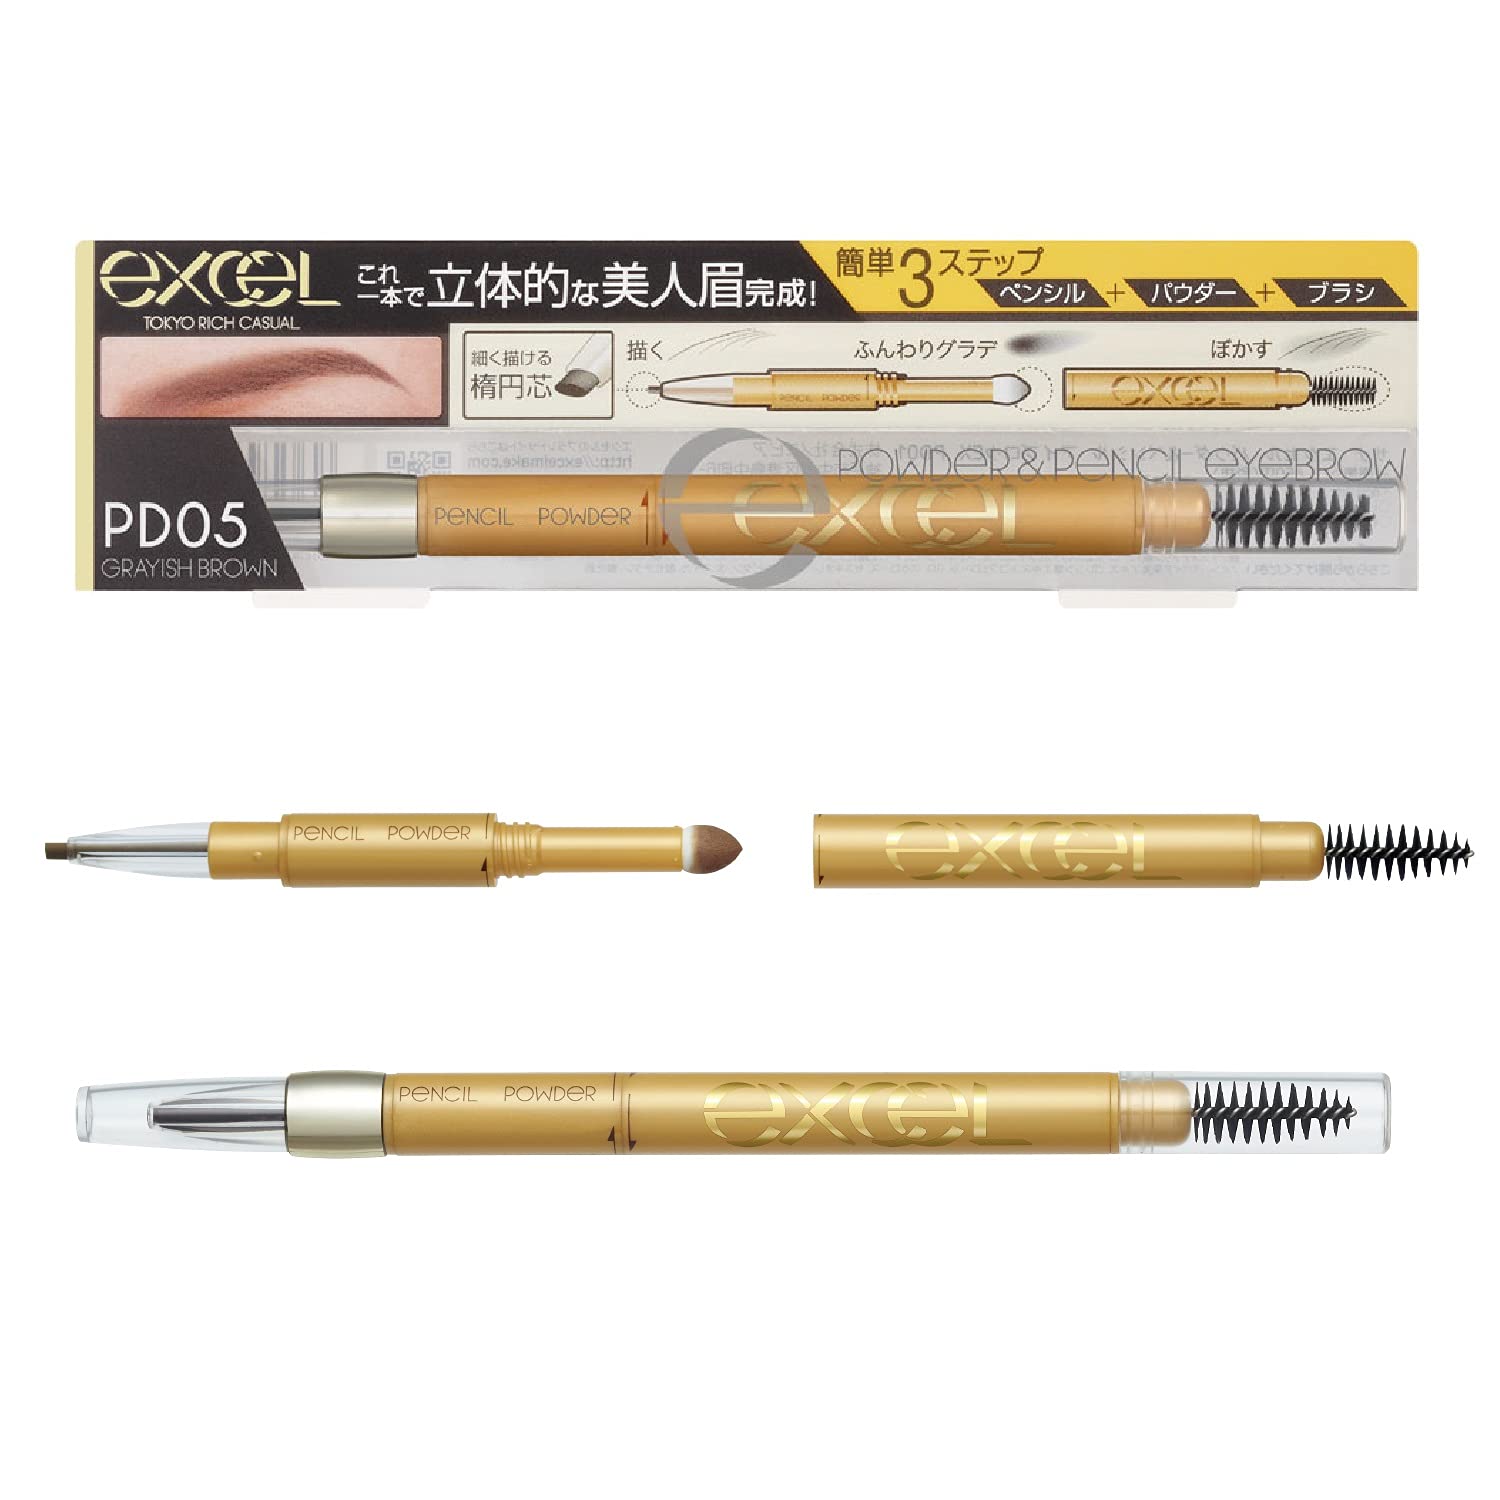 Excel Powder & Pencil Eyebrow EX PD05 (Grayish Brown) 3 - in - 1 - Buy Eyebrown From Japan